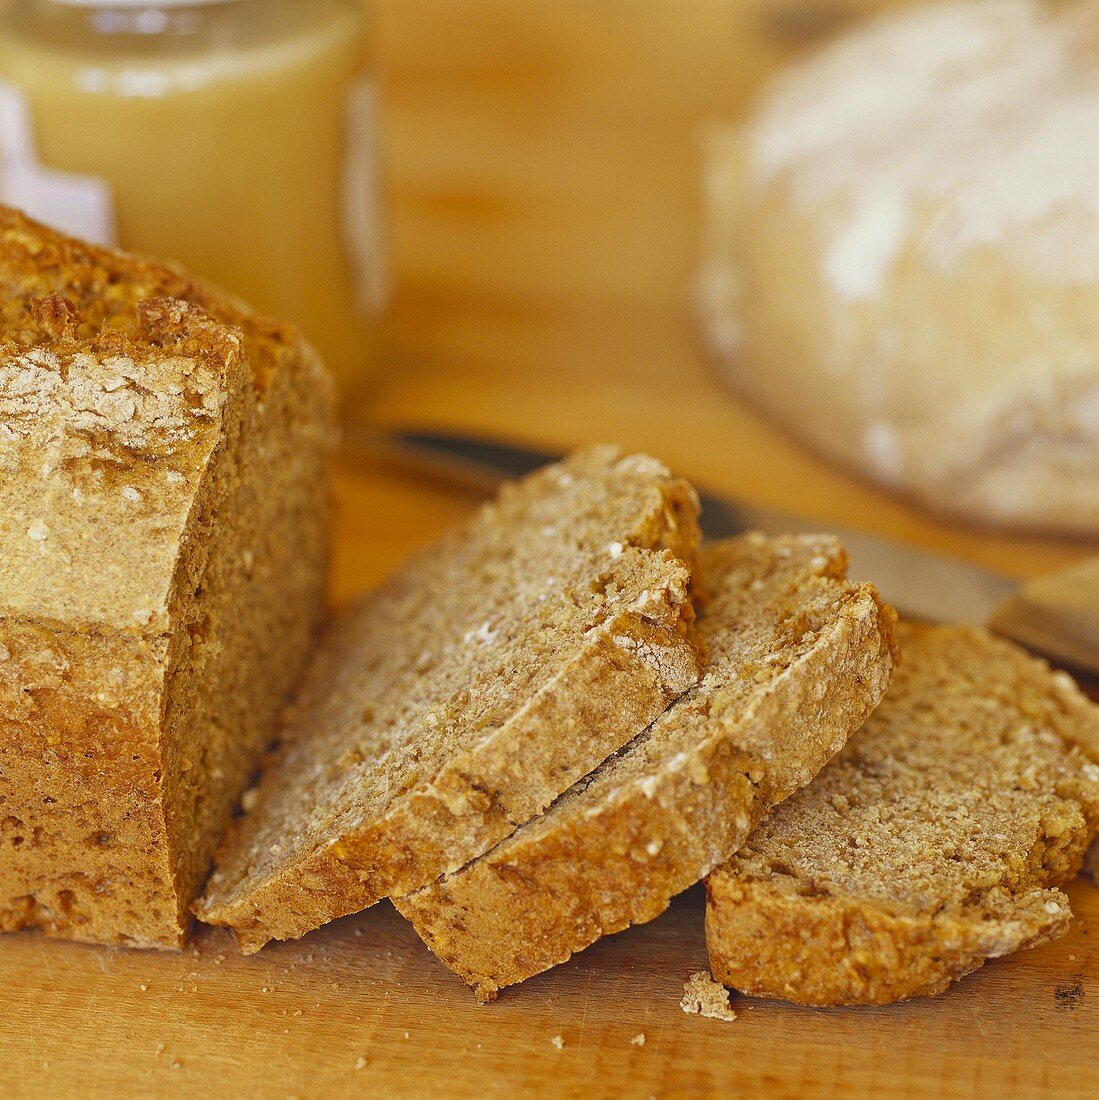 Wholemeal bread, slices cut, jar of honey behind